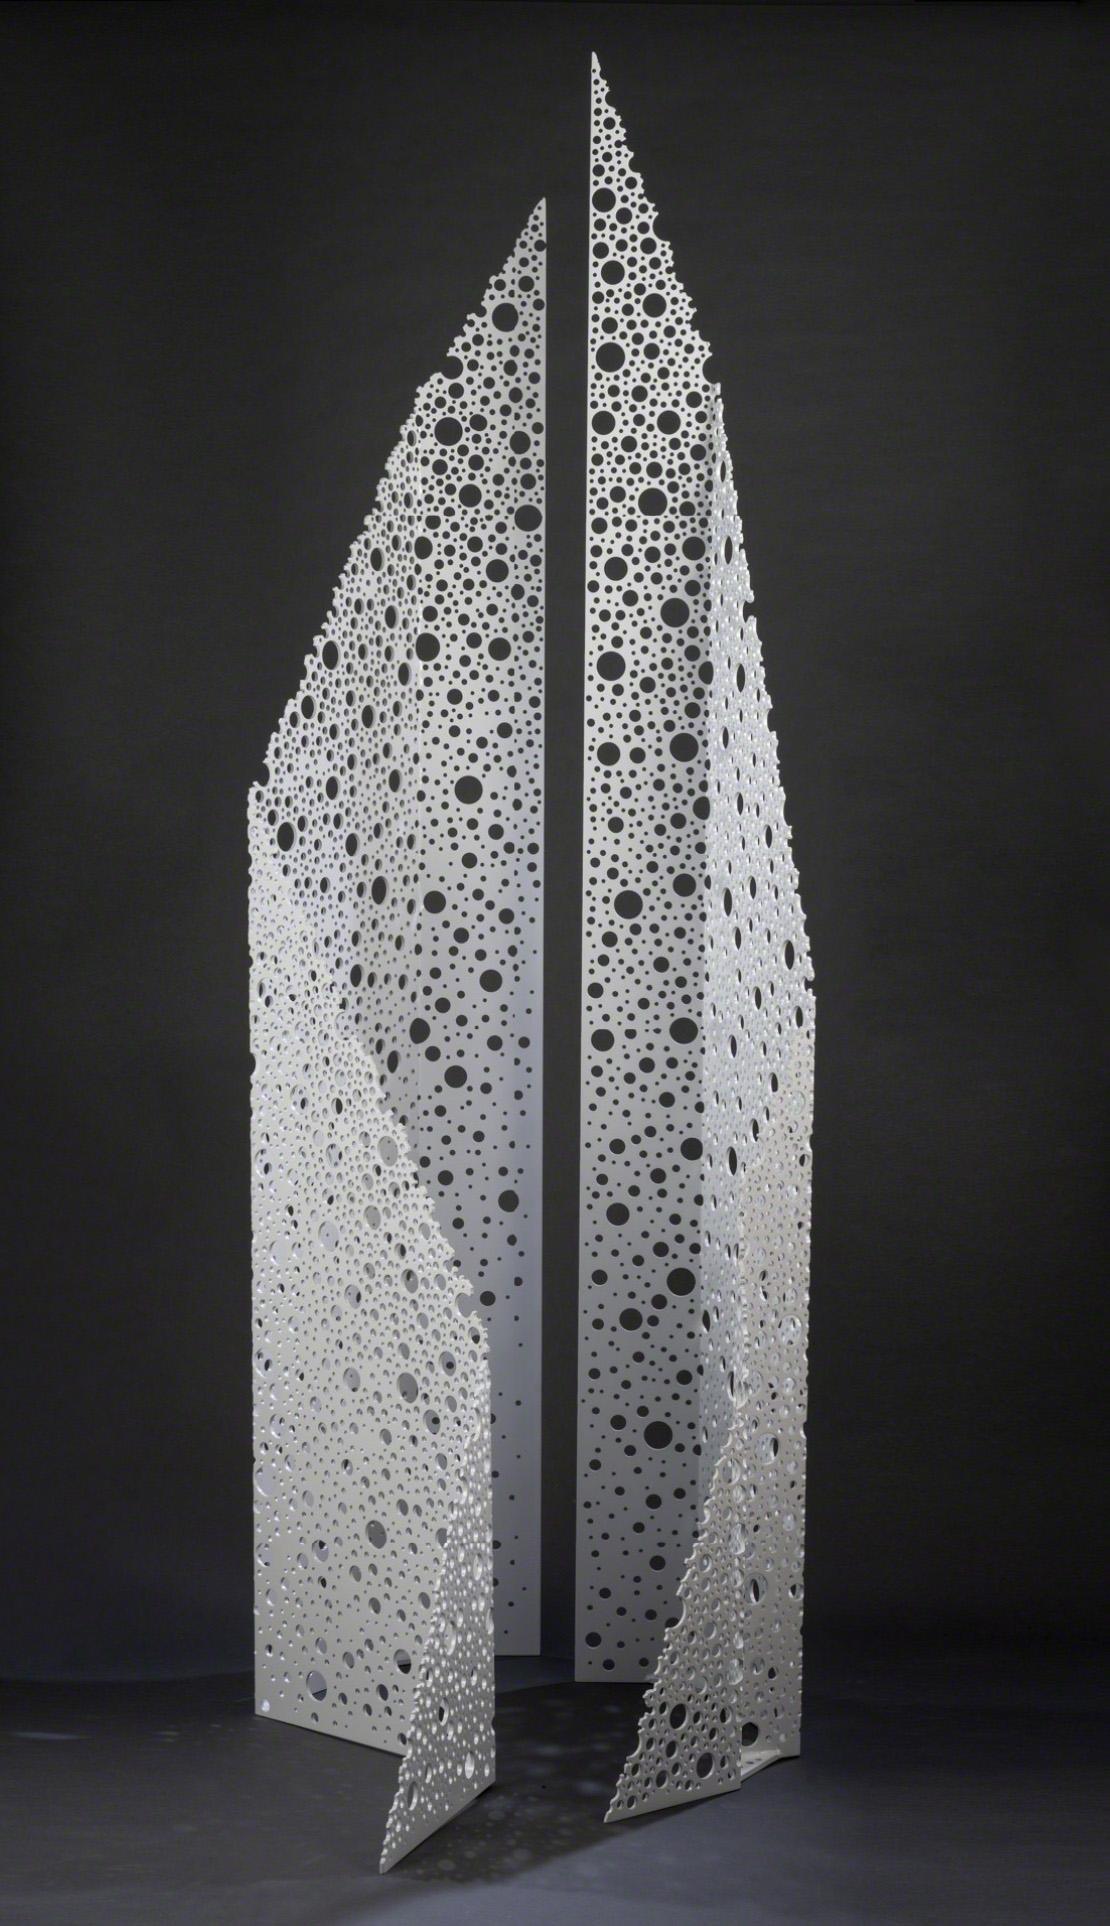 Abstract Sculpture Michael Enn Sirvet - « Seahale Vertices », sculpture métallique abstraite minimaliste, aluminium peint en blanc